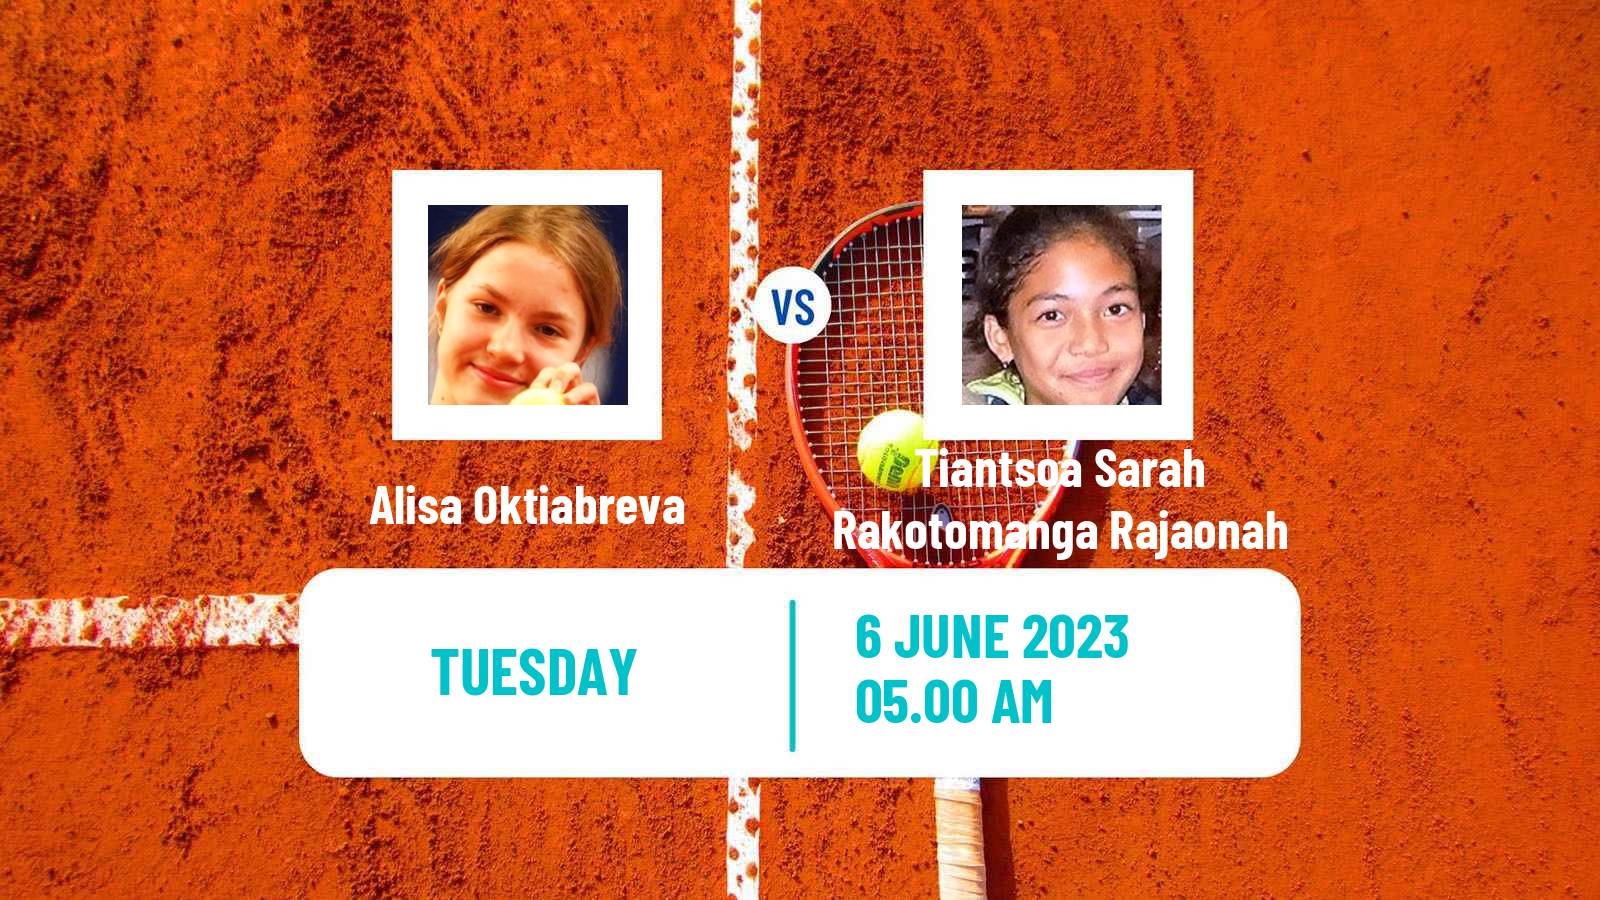 Tennis Girls Singles French Open Alisa Oktiabreva - Tiantsoa Sarah Rakotomanga Rajaonah